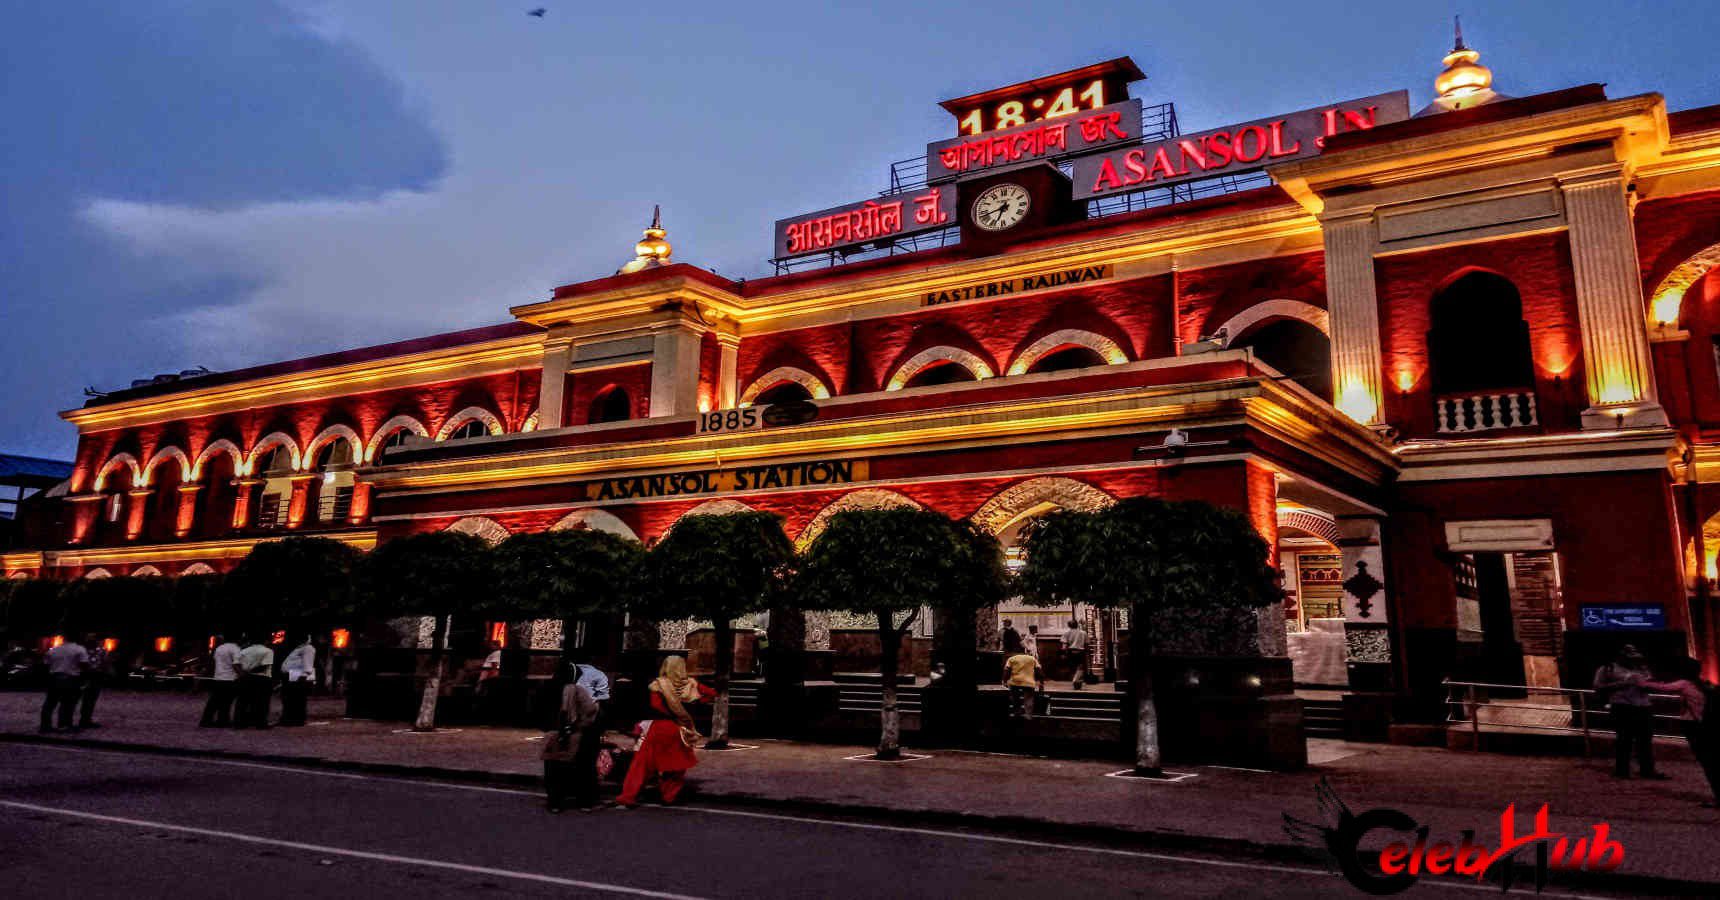 Asansol Railway Station